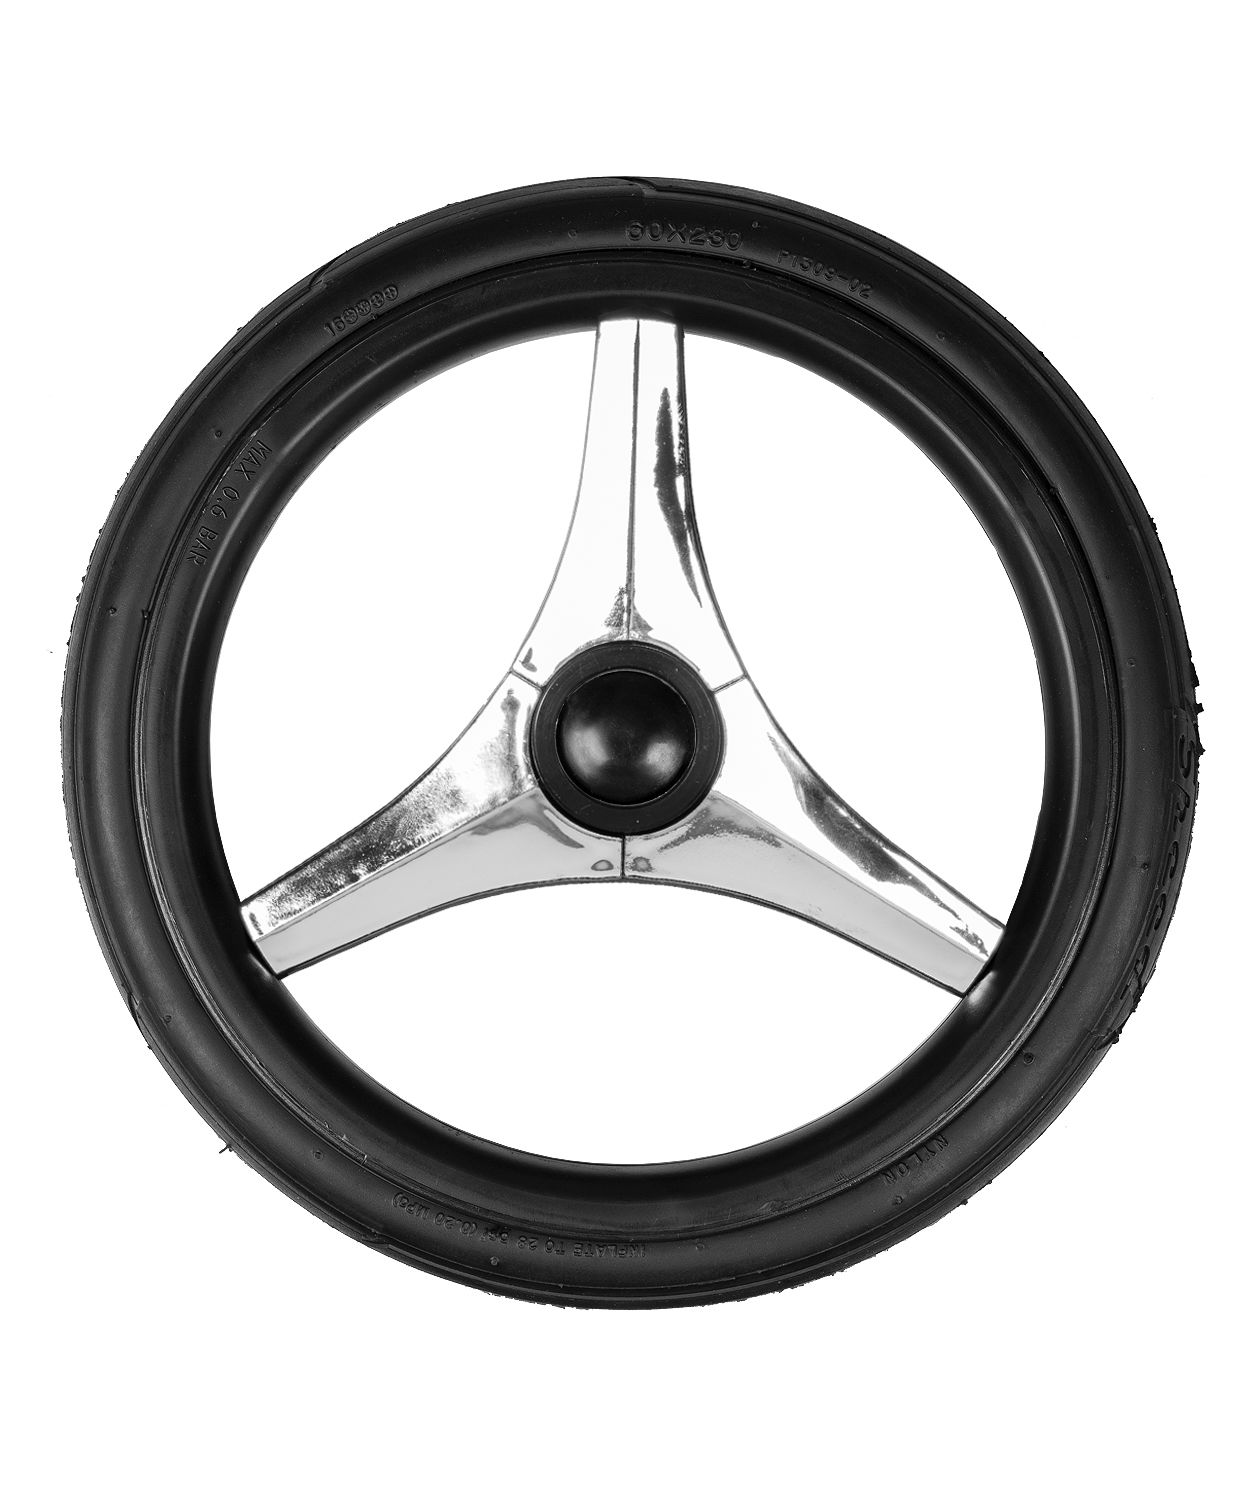 venicci replacement wheels